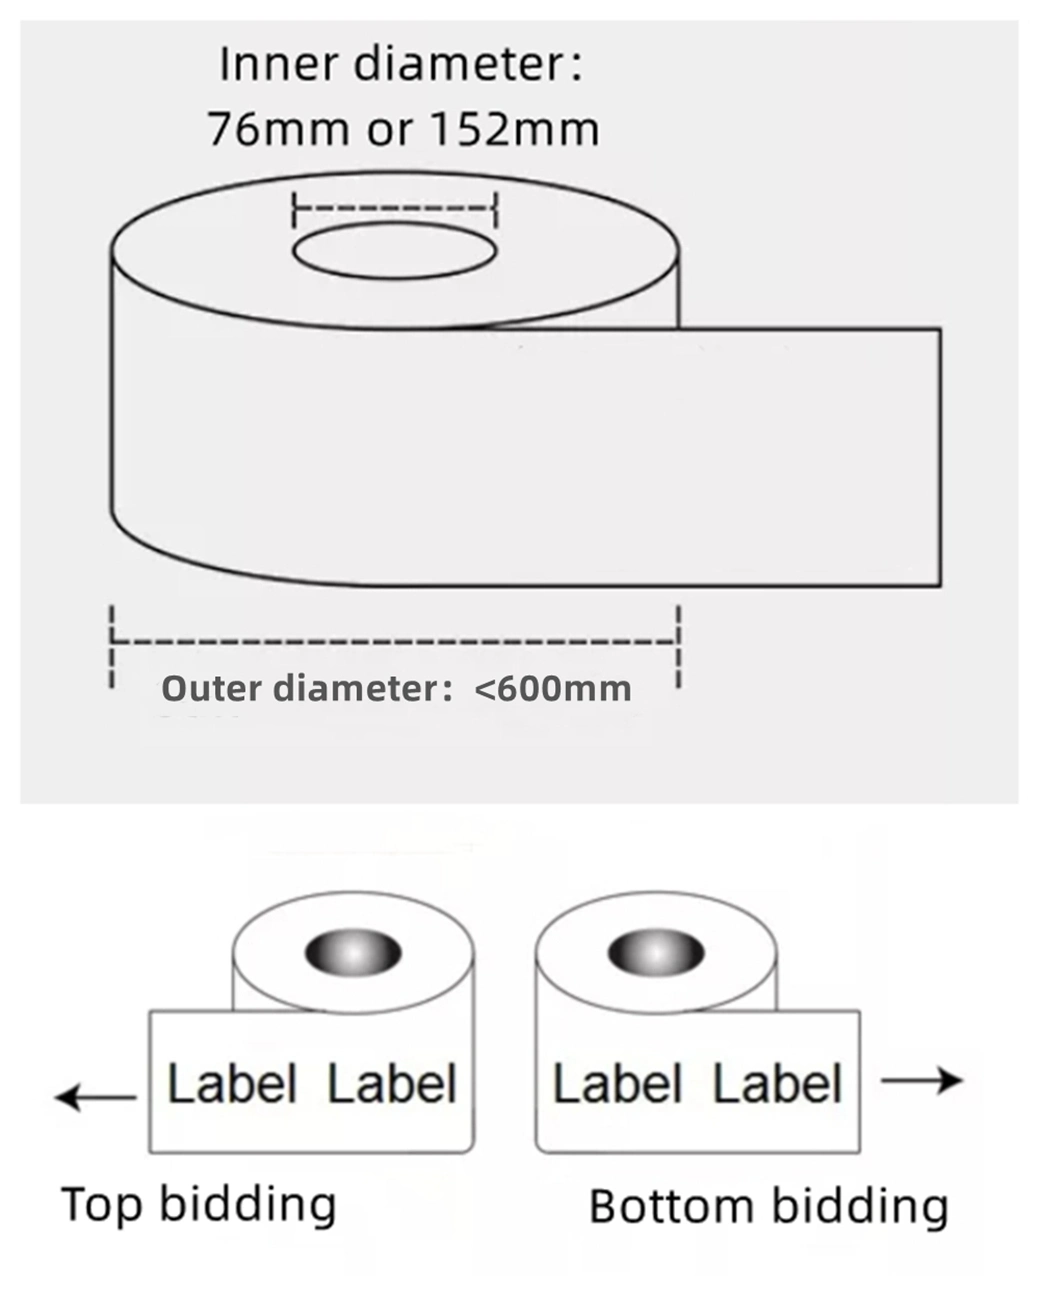 OEM PVC Shrink Sleeves for Water Bottle Label Stickers Label Pet Film Heat Shrinkable PVC Shrink Sleeve